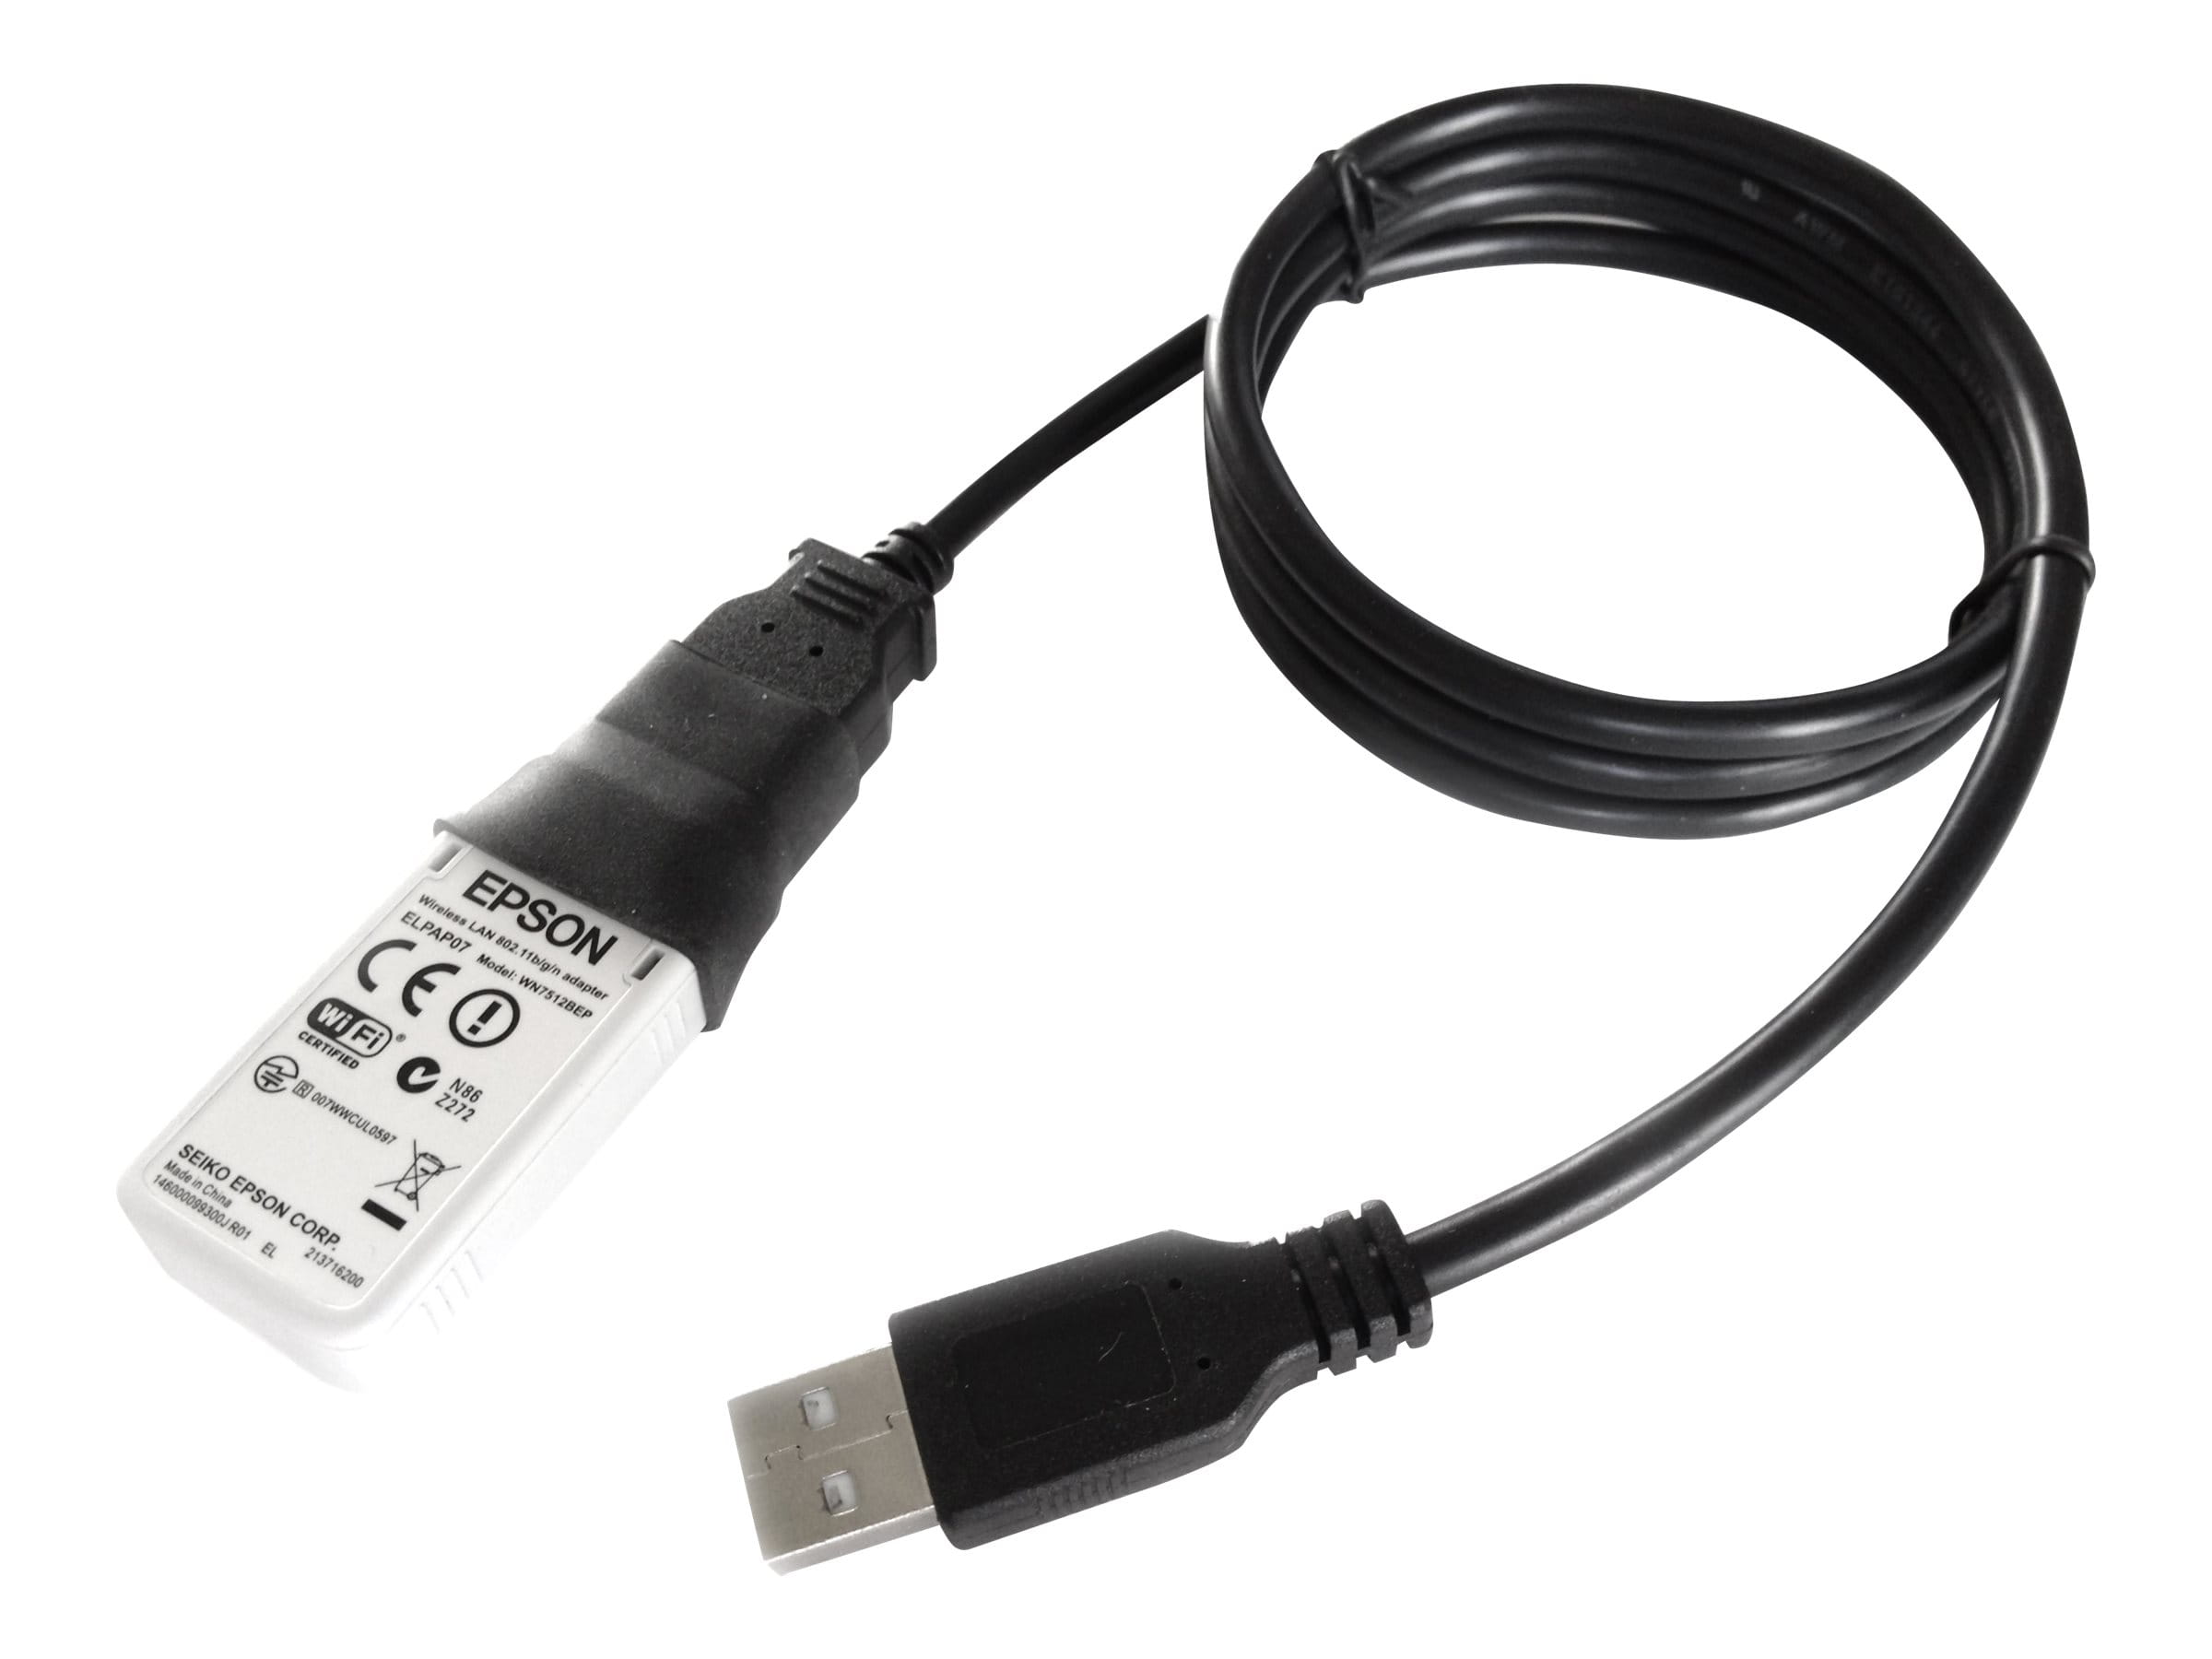 Epson OT-WL06-323 - Netzwerkadapter - USB - 802.11a, 802.11b/g/n